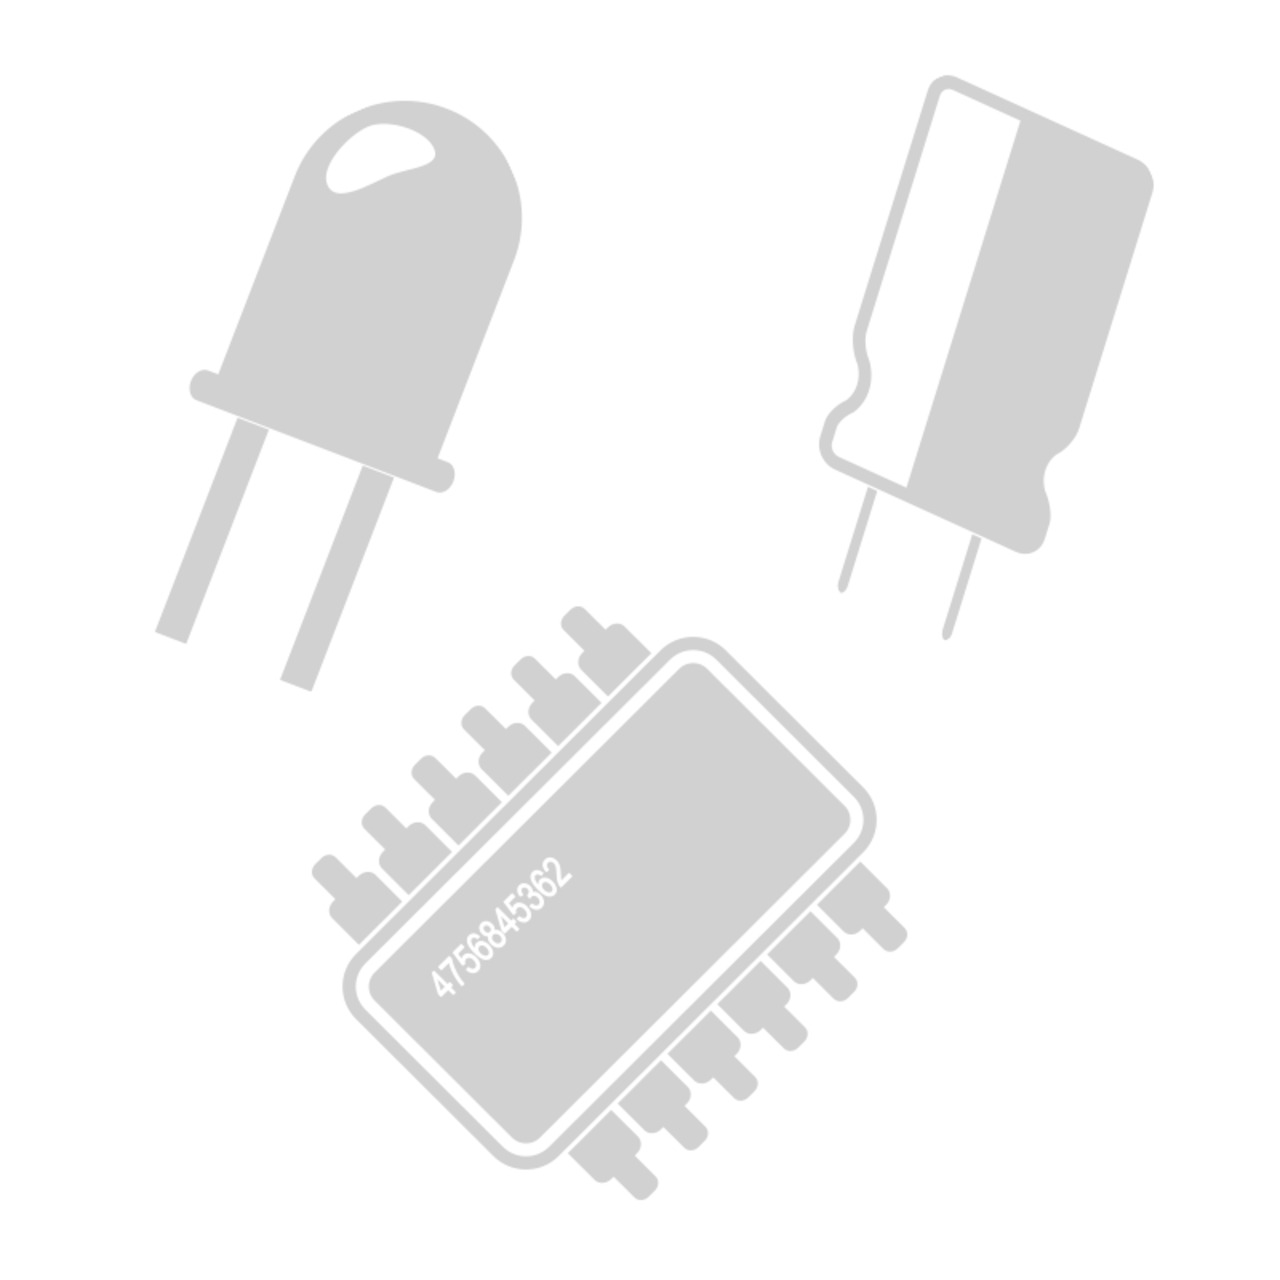 Transistor BC337-25